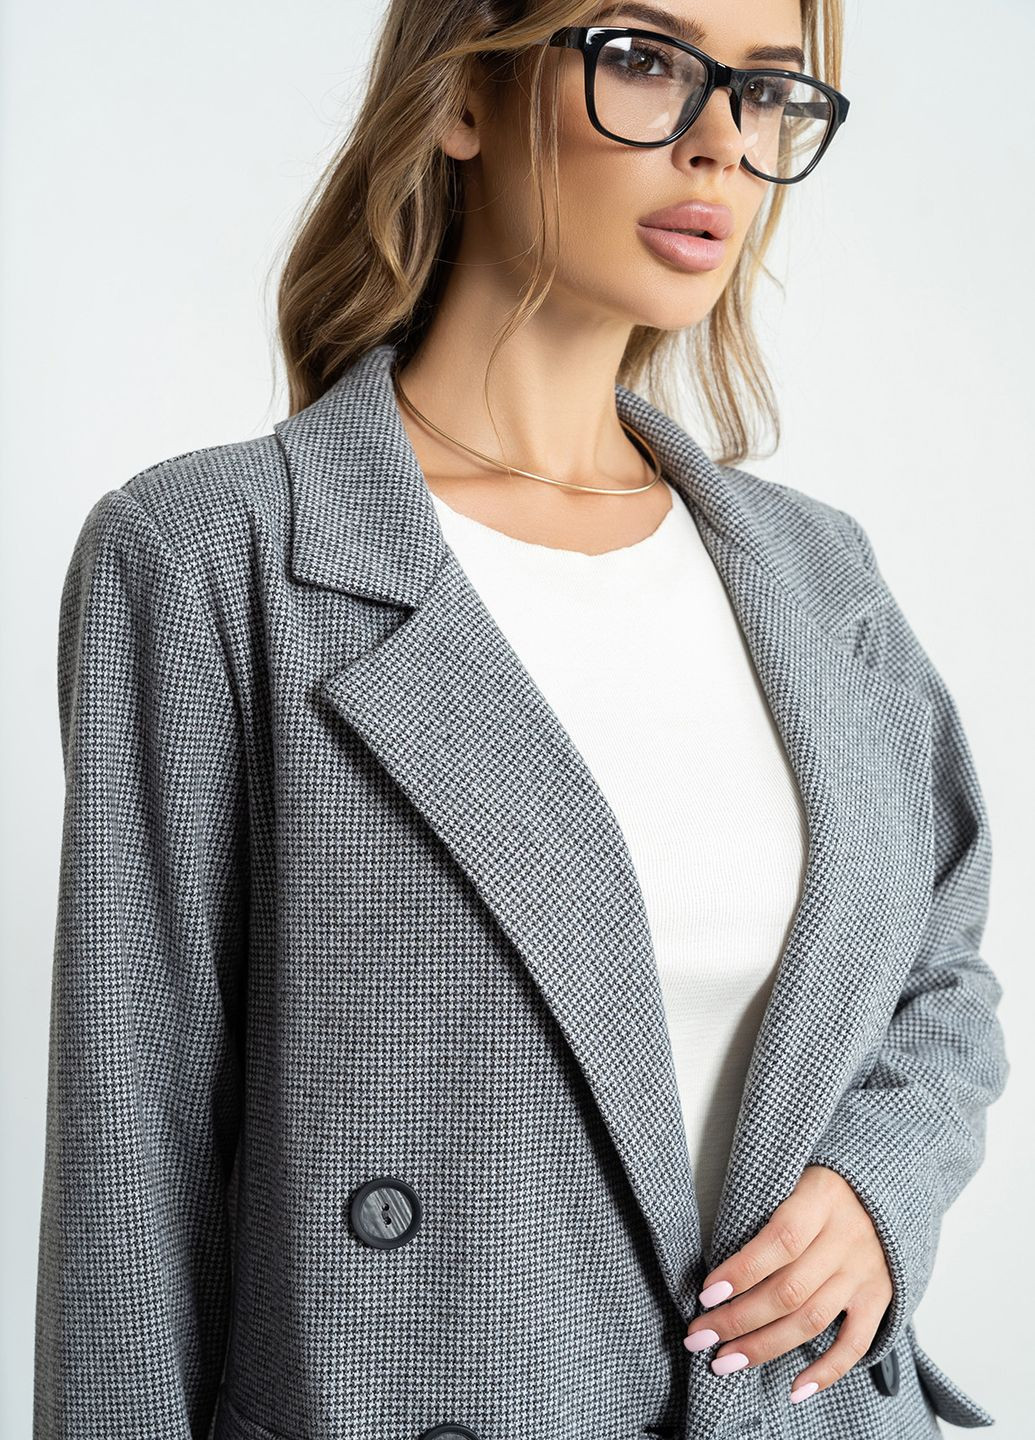 Серый женский пиджак ISSA PLUS - демисезонный